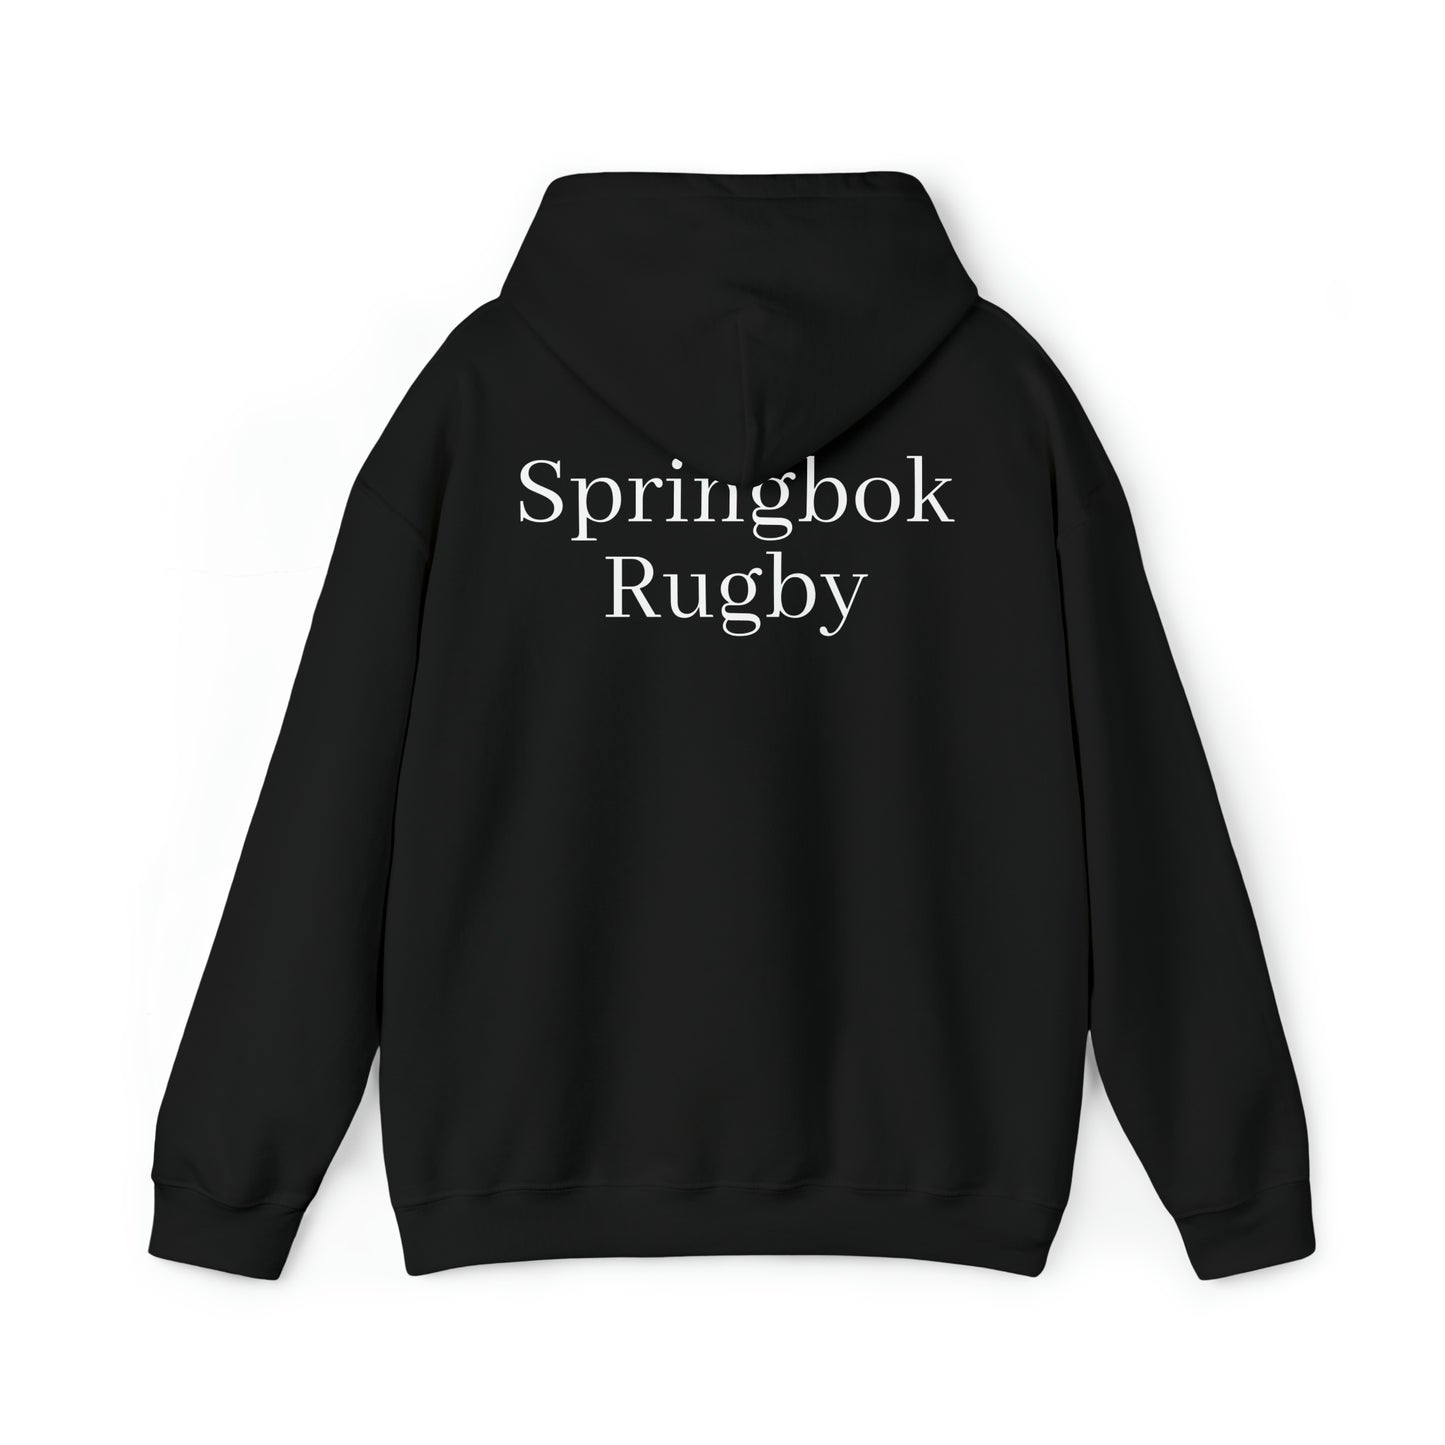 Springboks Celebrating with RWC - dark hoodies